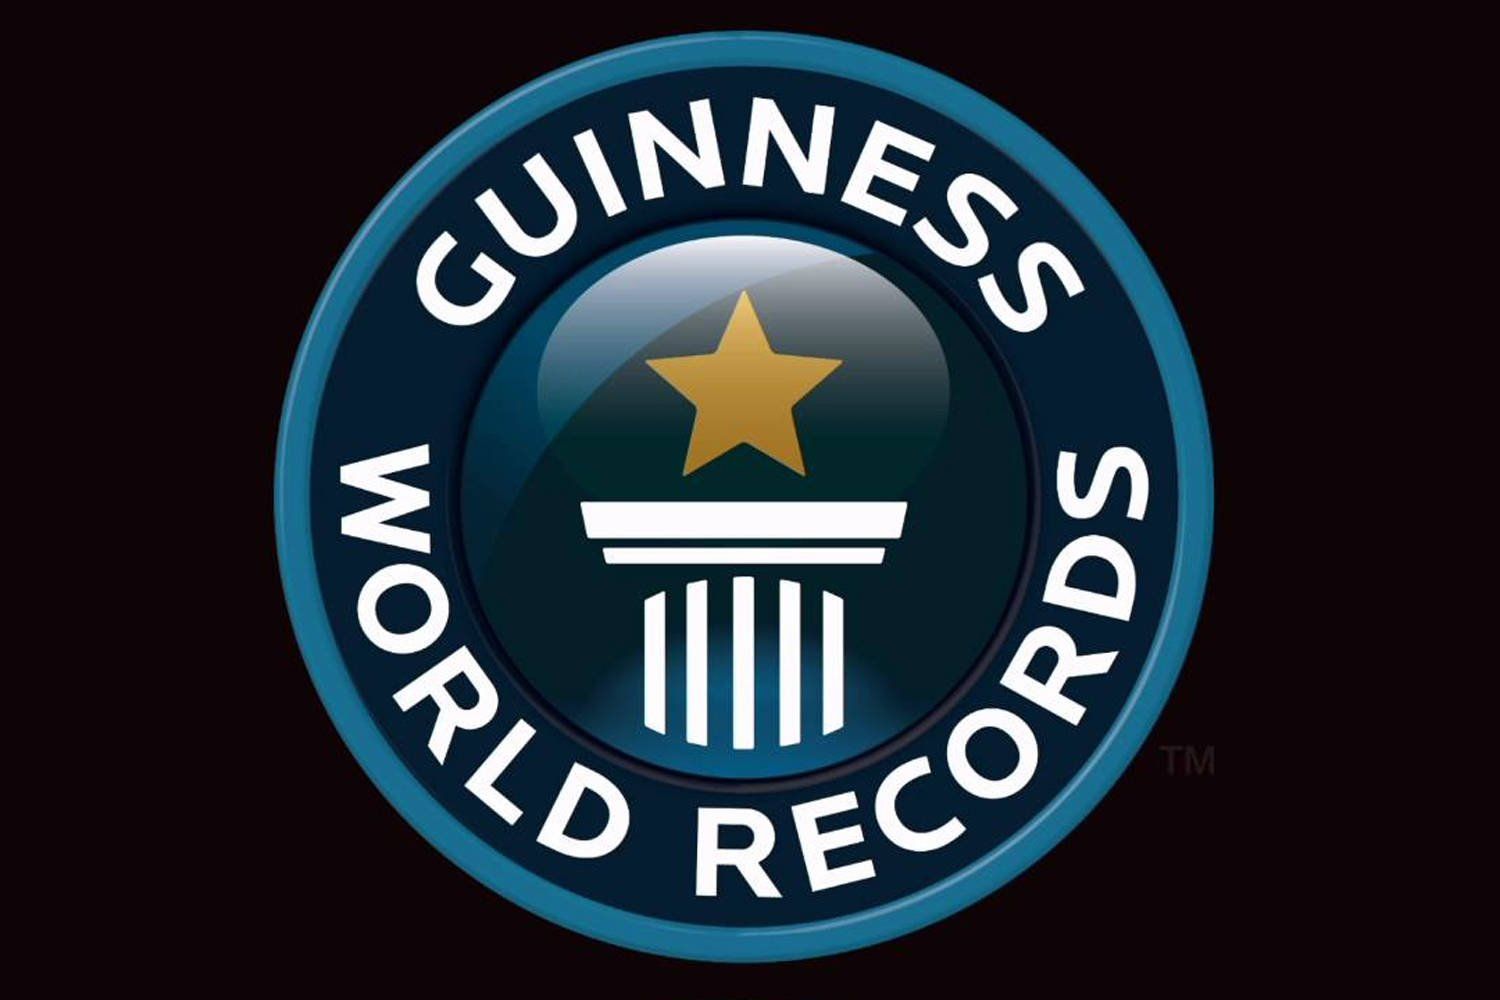 Ribeye reccomend Guinness world records